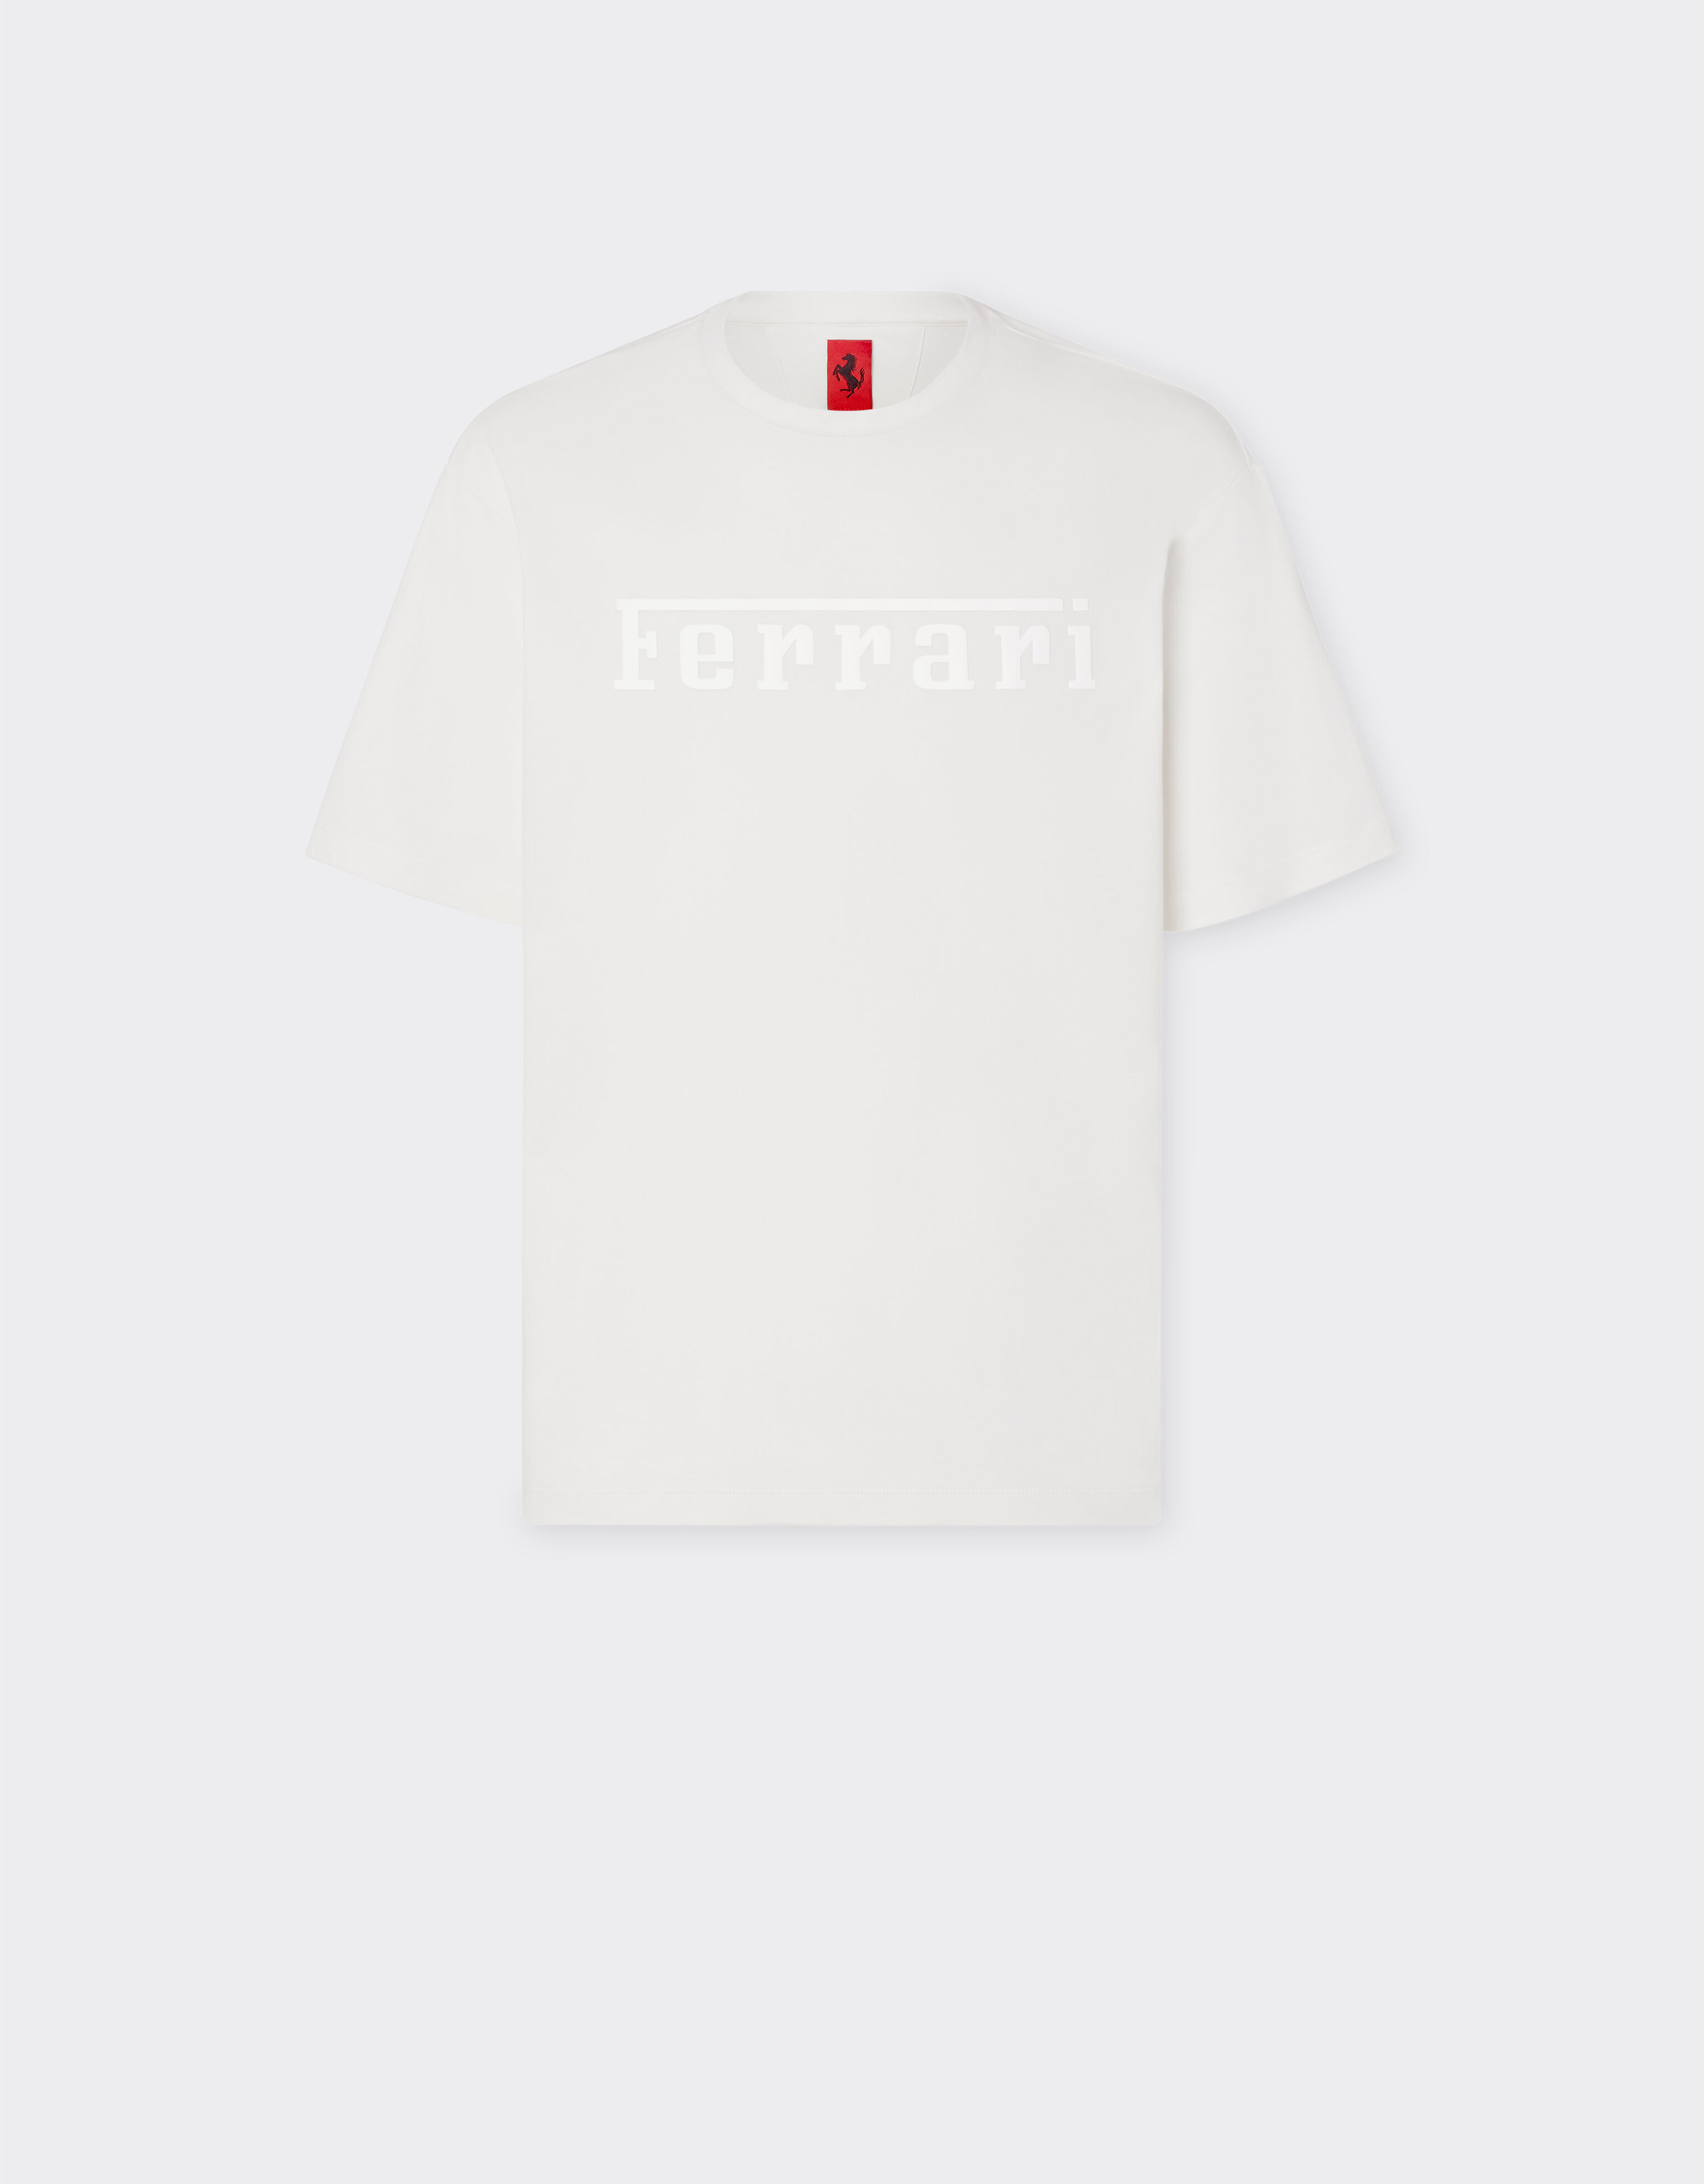 Ferrari Cotton T-shirt with Ferrari logo Burgundy 21135f